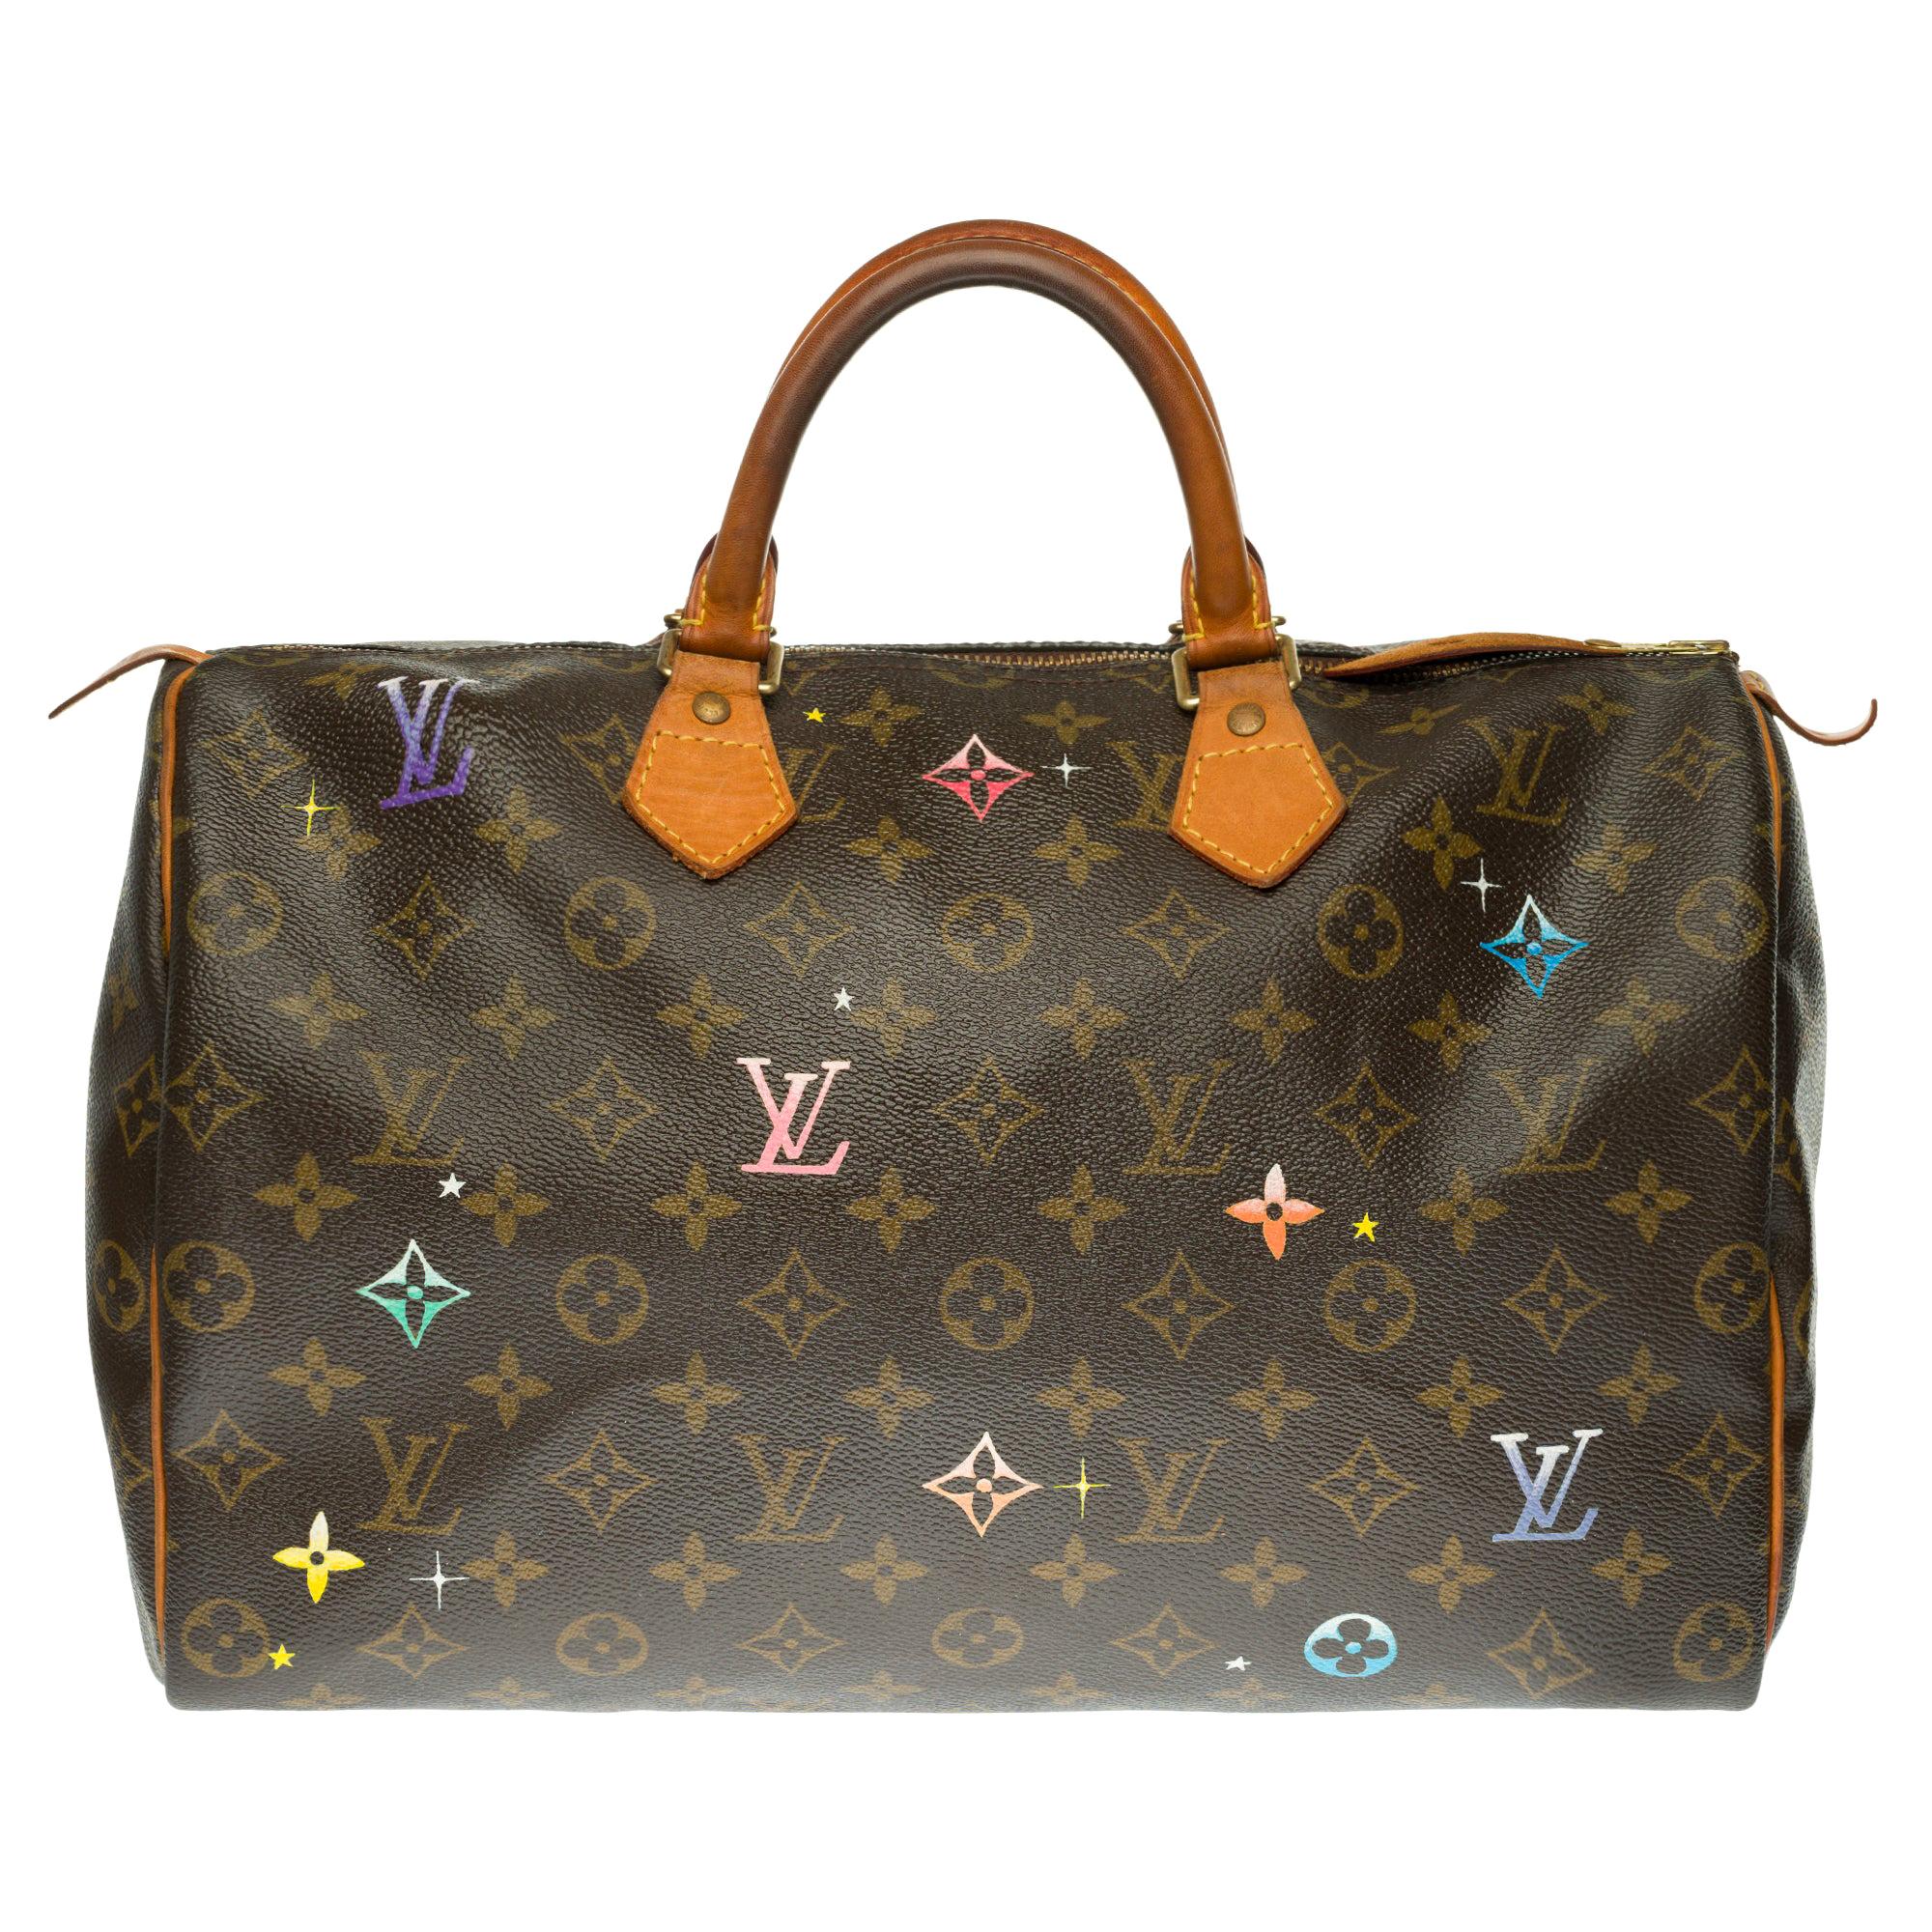 Customized Louis Vuitton Speedy 35 handbag in Monogram canvas